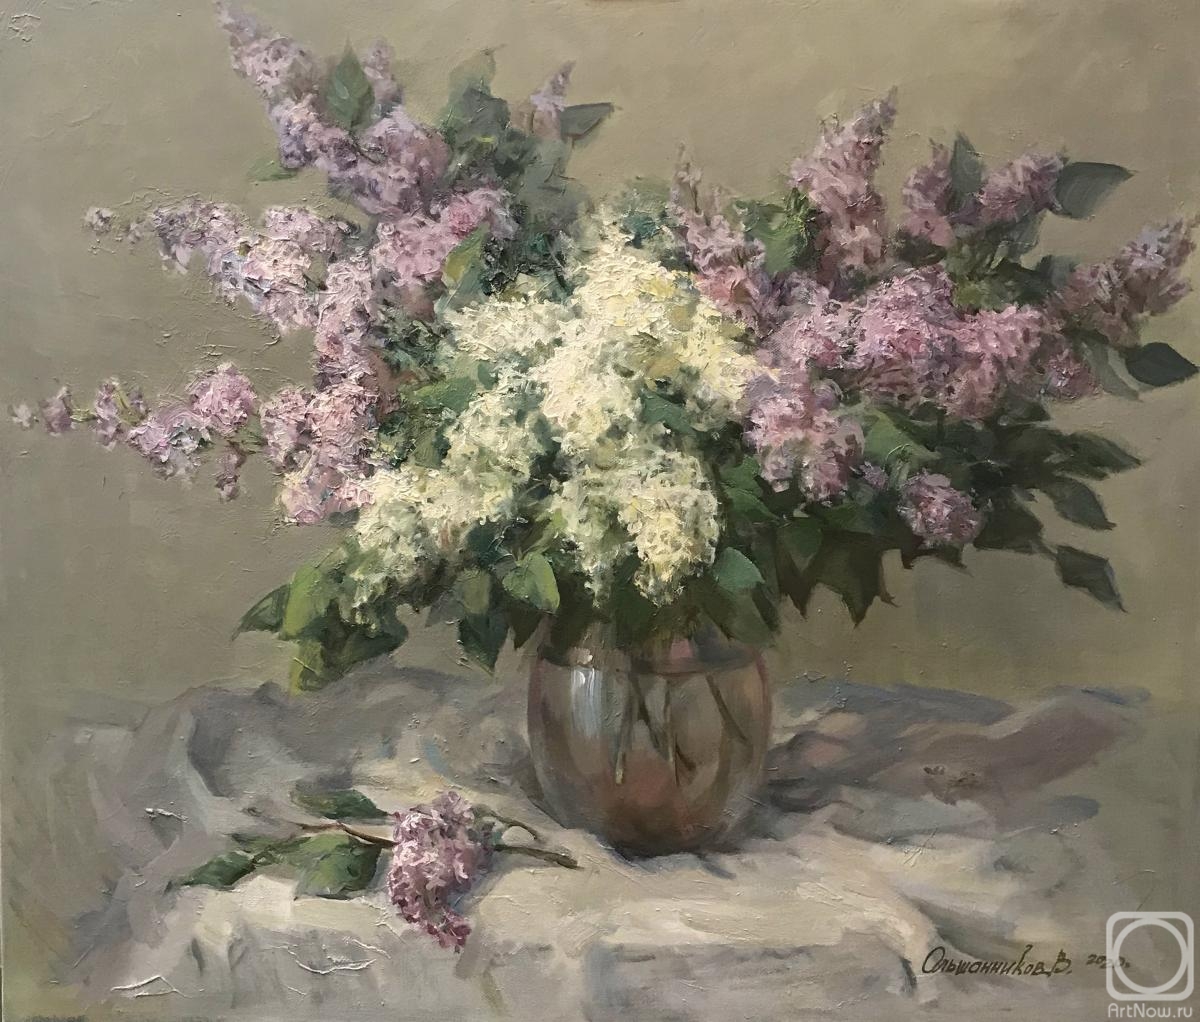 Olshannikov Vasiliy. Lilac